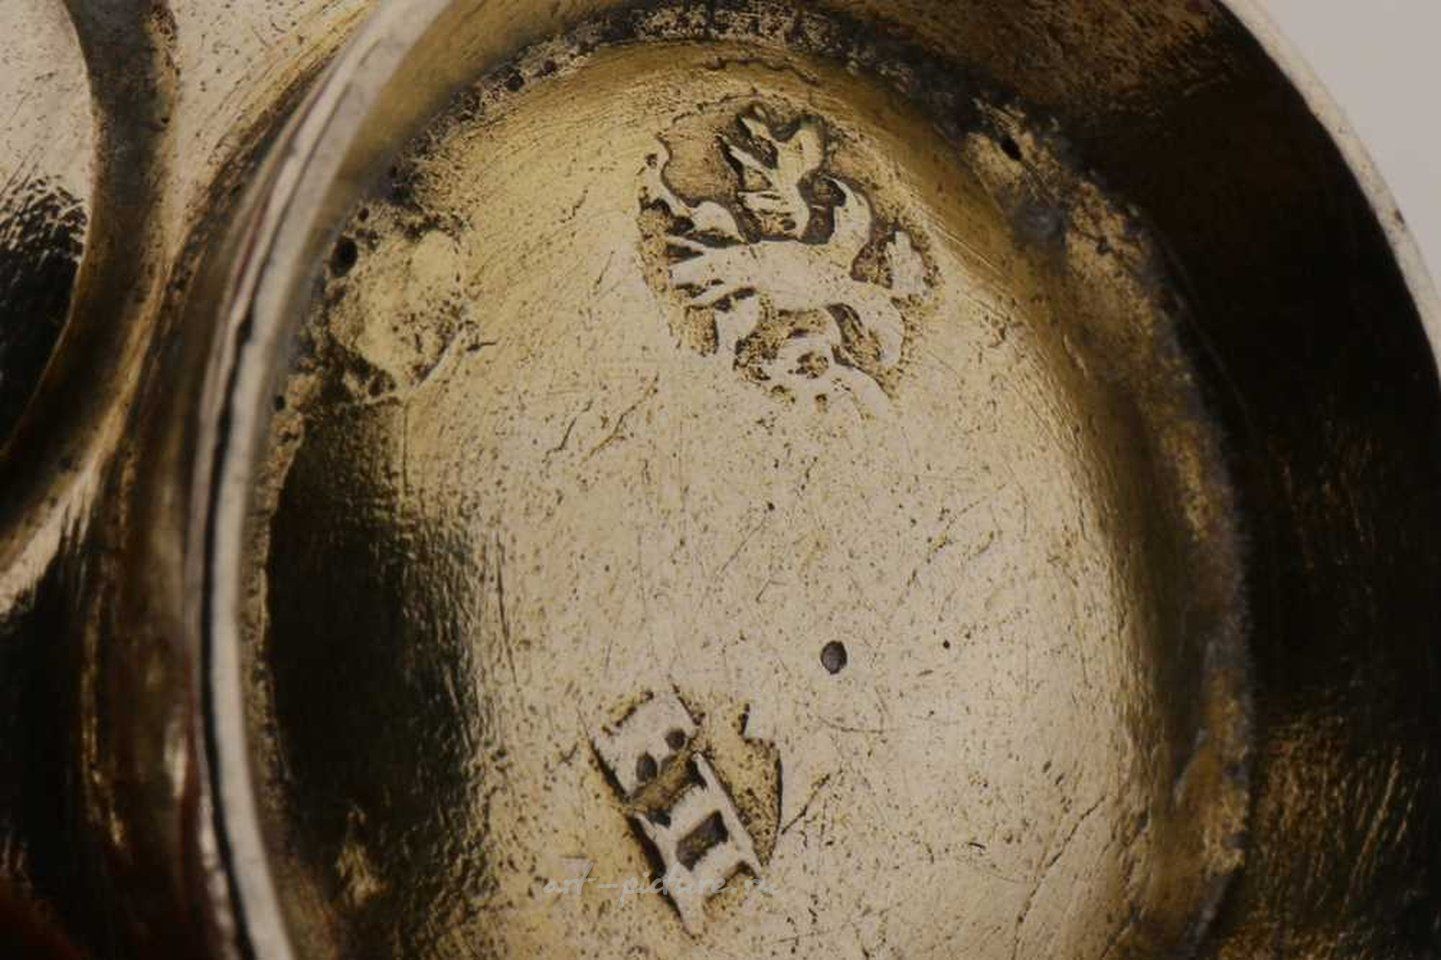 Русское серебро , Русская серебряная водочная чарка (чарка) раннего 18 века Петра I